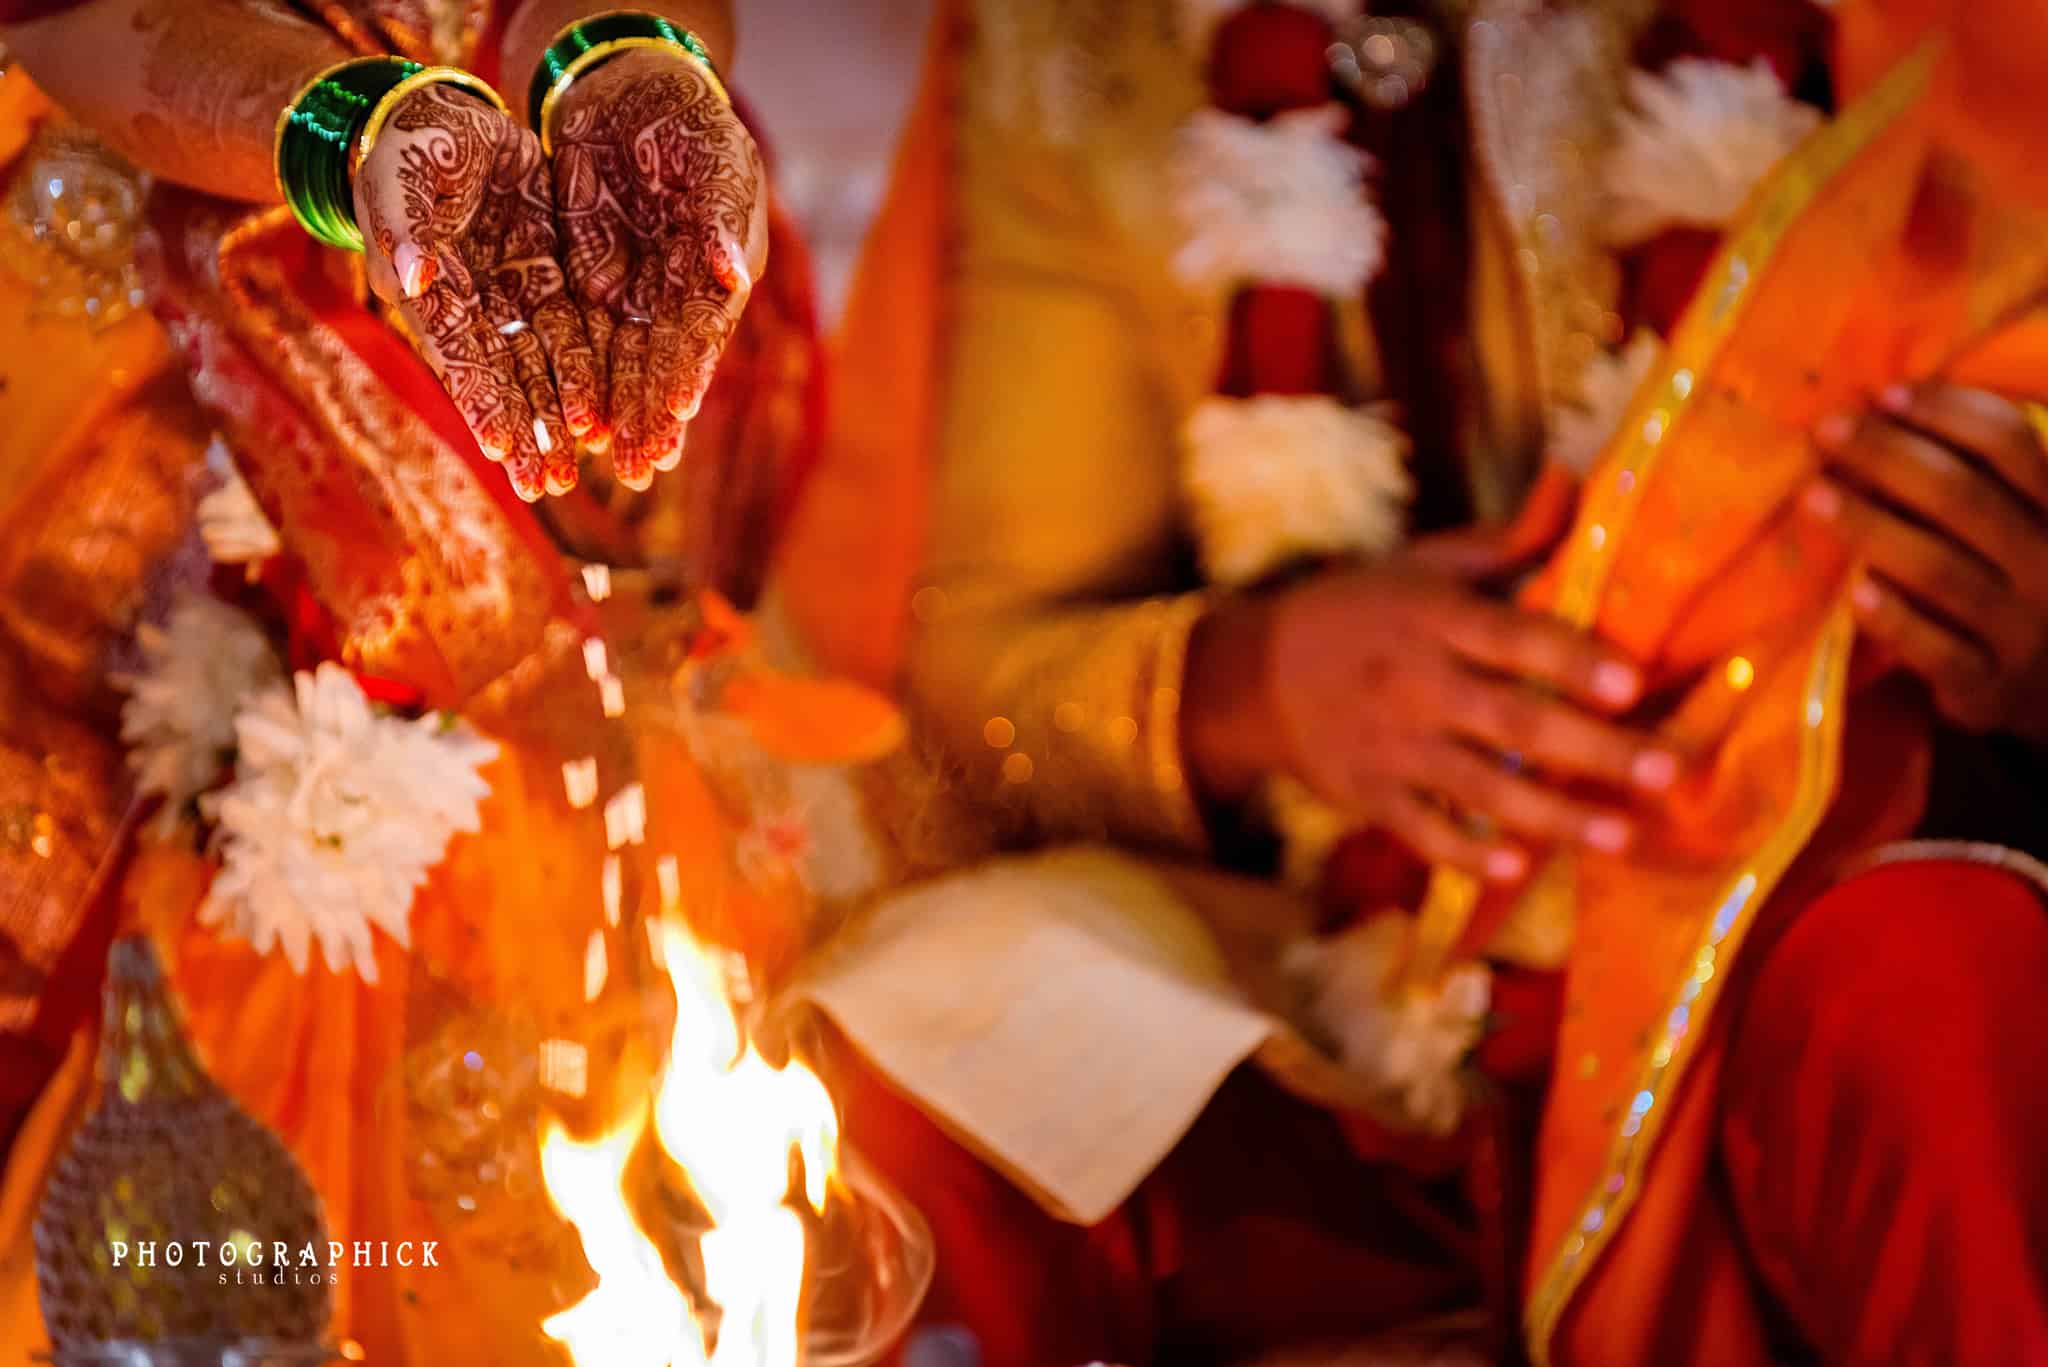 Hershey PA Indian Wedding, Gauri and Vikram: Hershey PA Indian Wedding